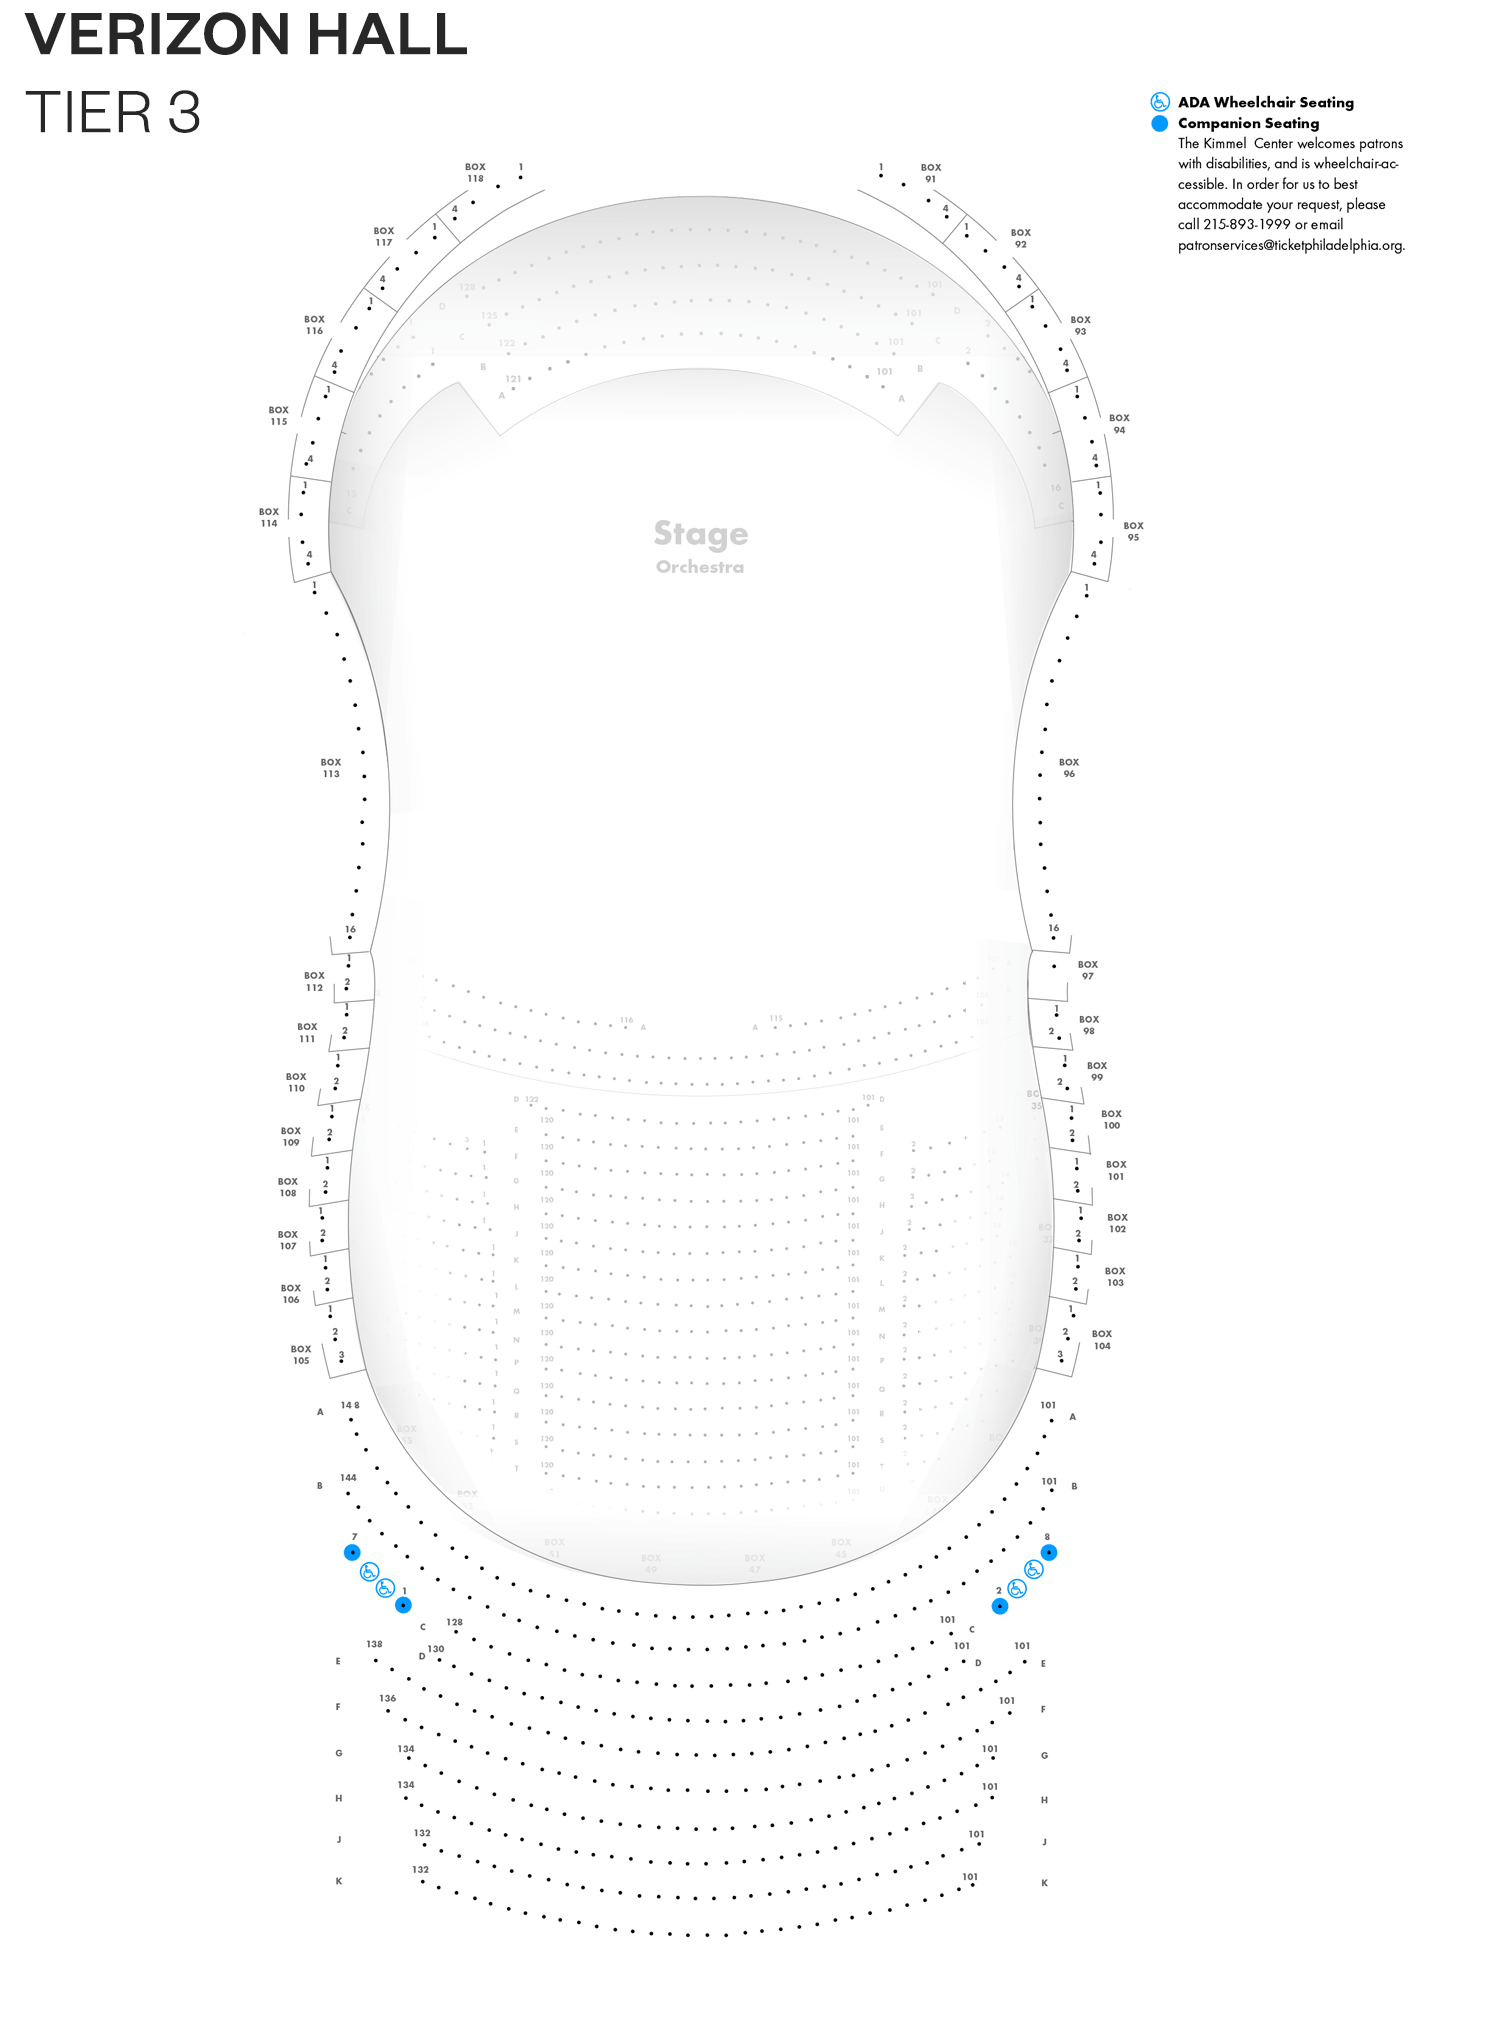 Verizon Hall - Third Tier - Seating Chart